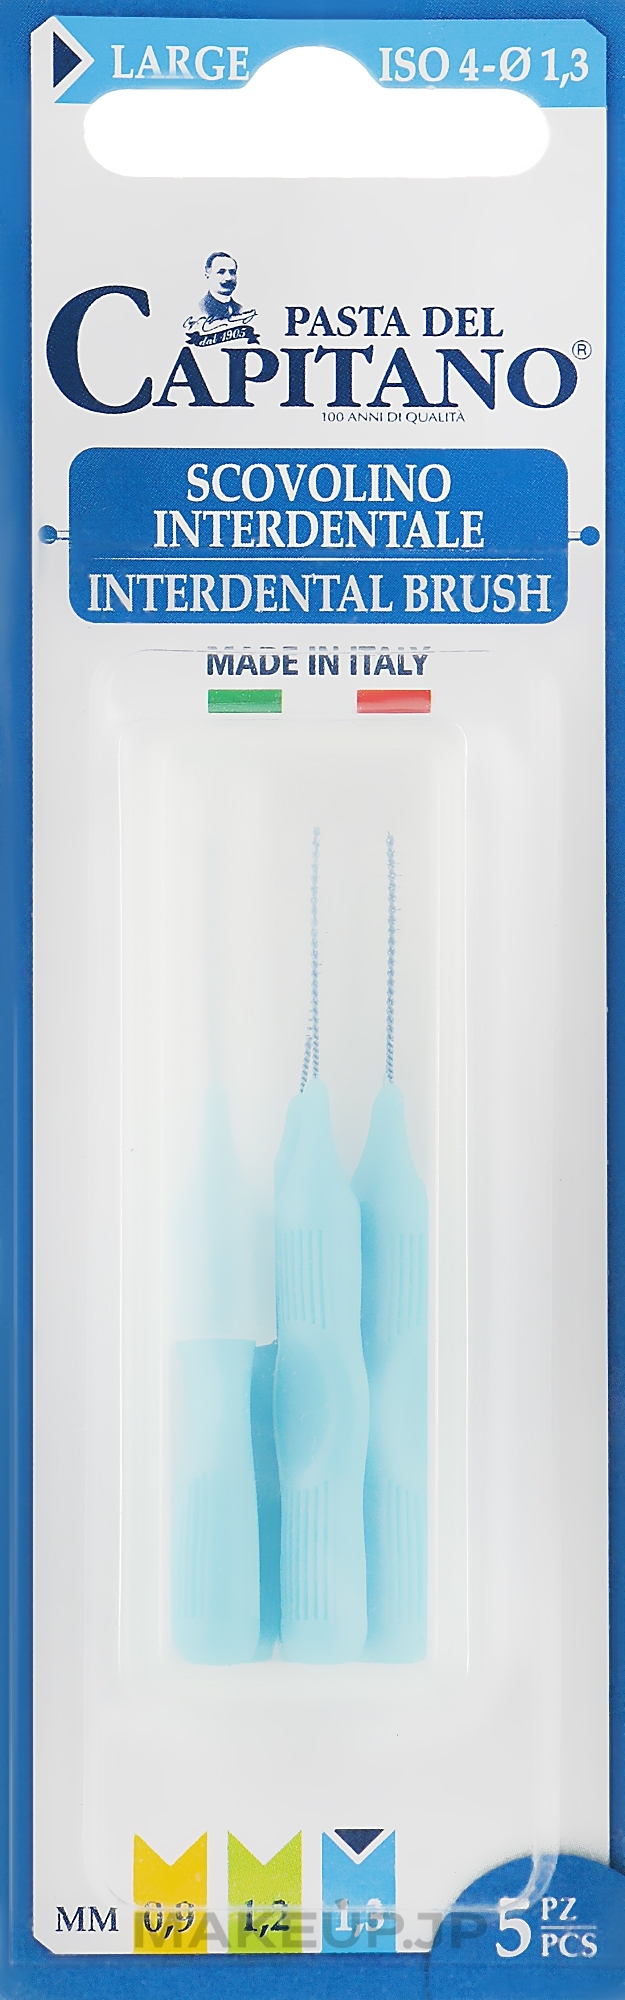 Interdental Brushes Set, blue - Pasta Del Capitano Interdental Brush Large 1.5 mm — photo 5 szt.